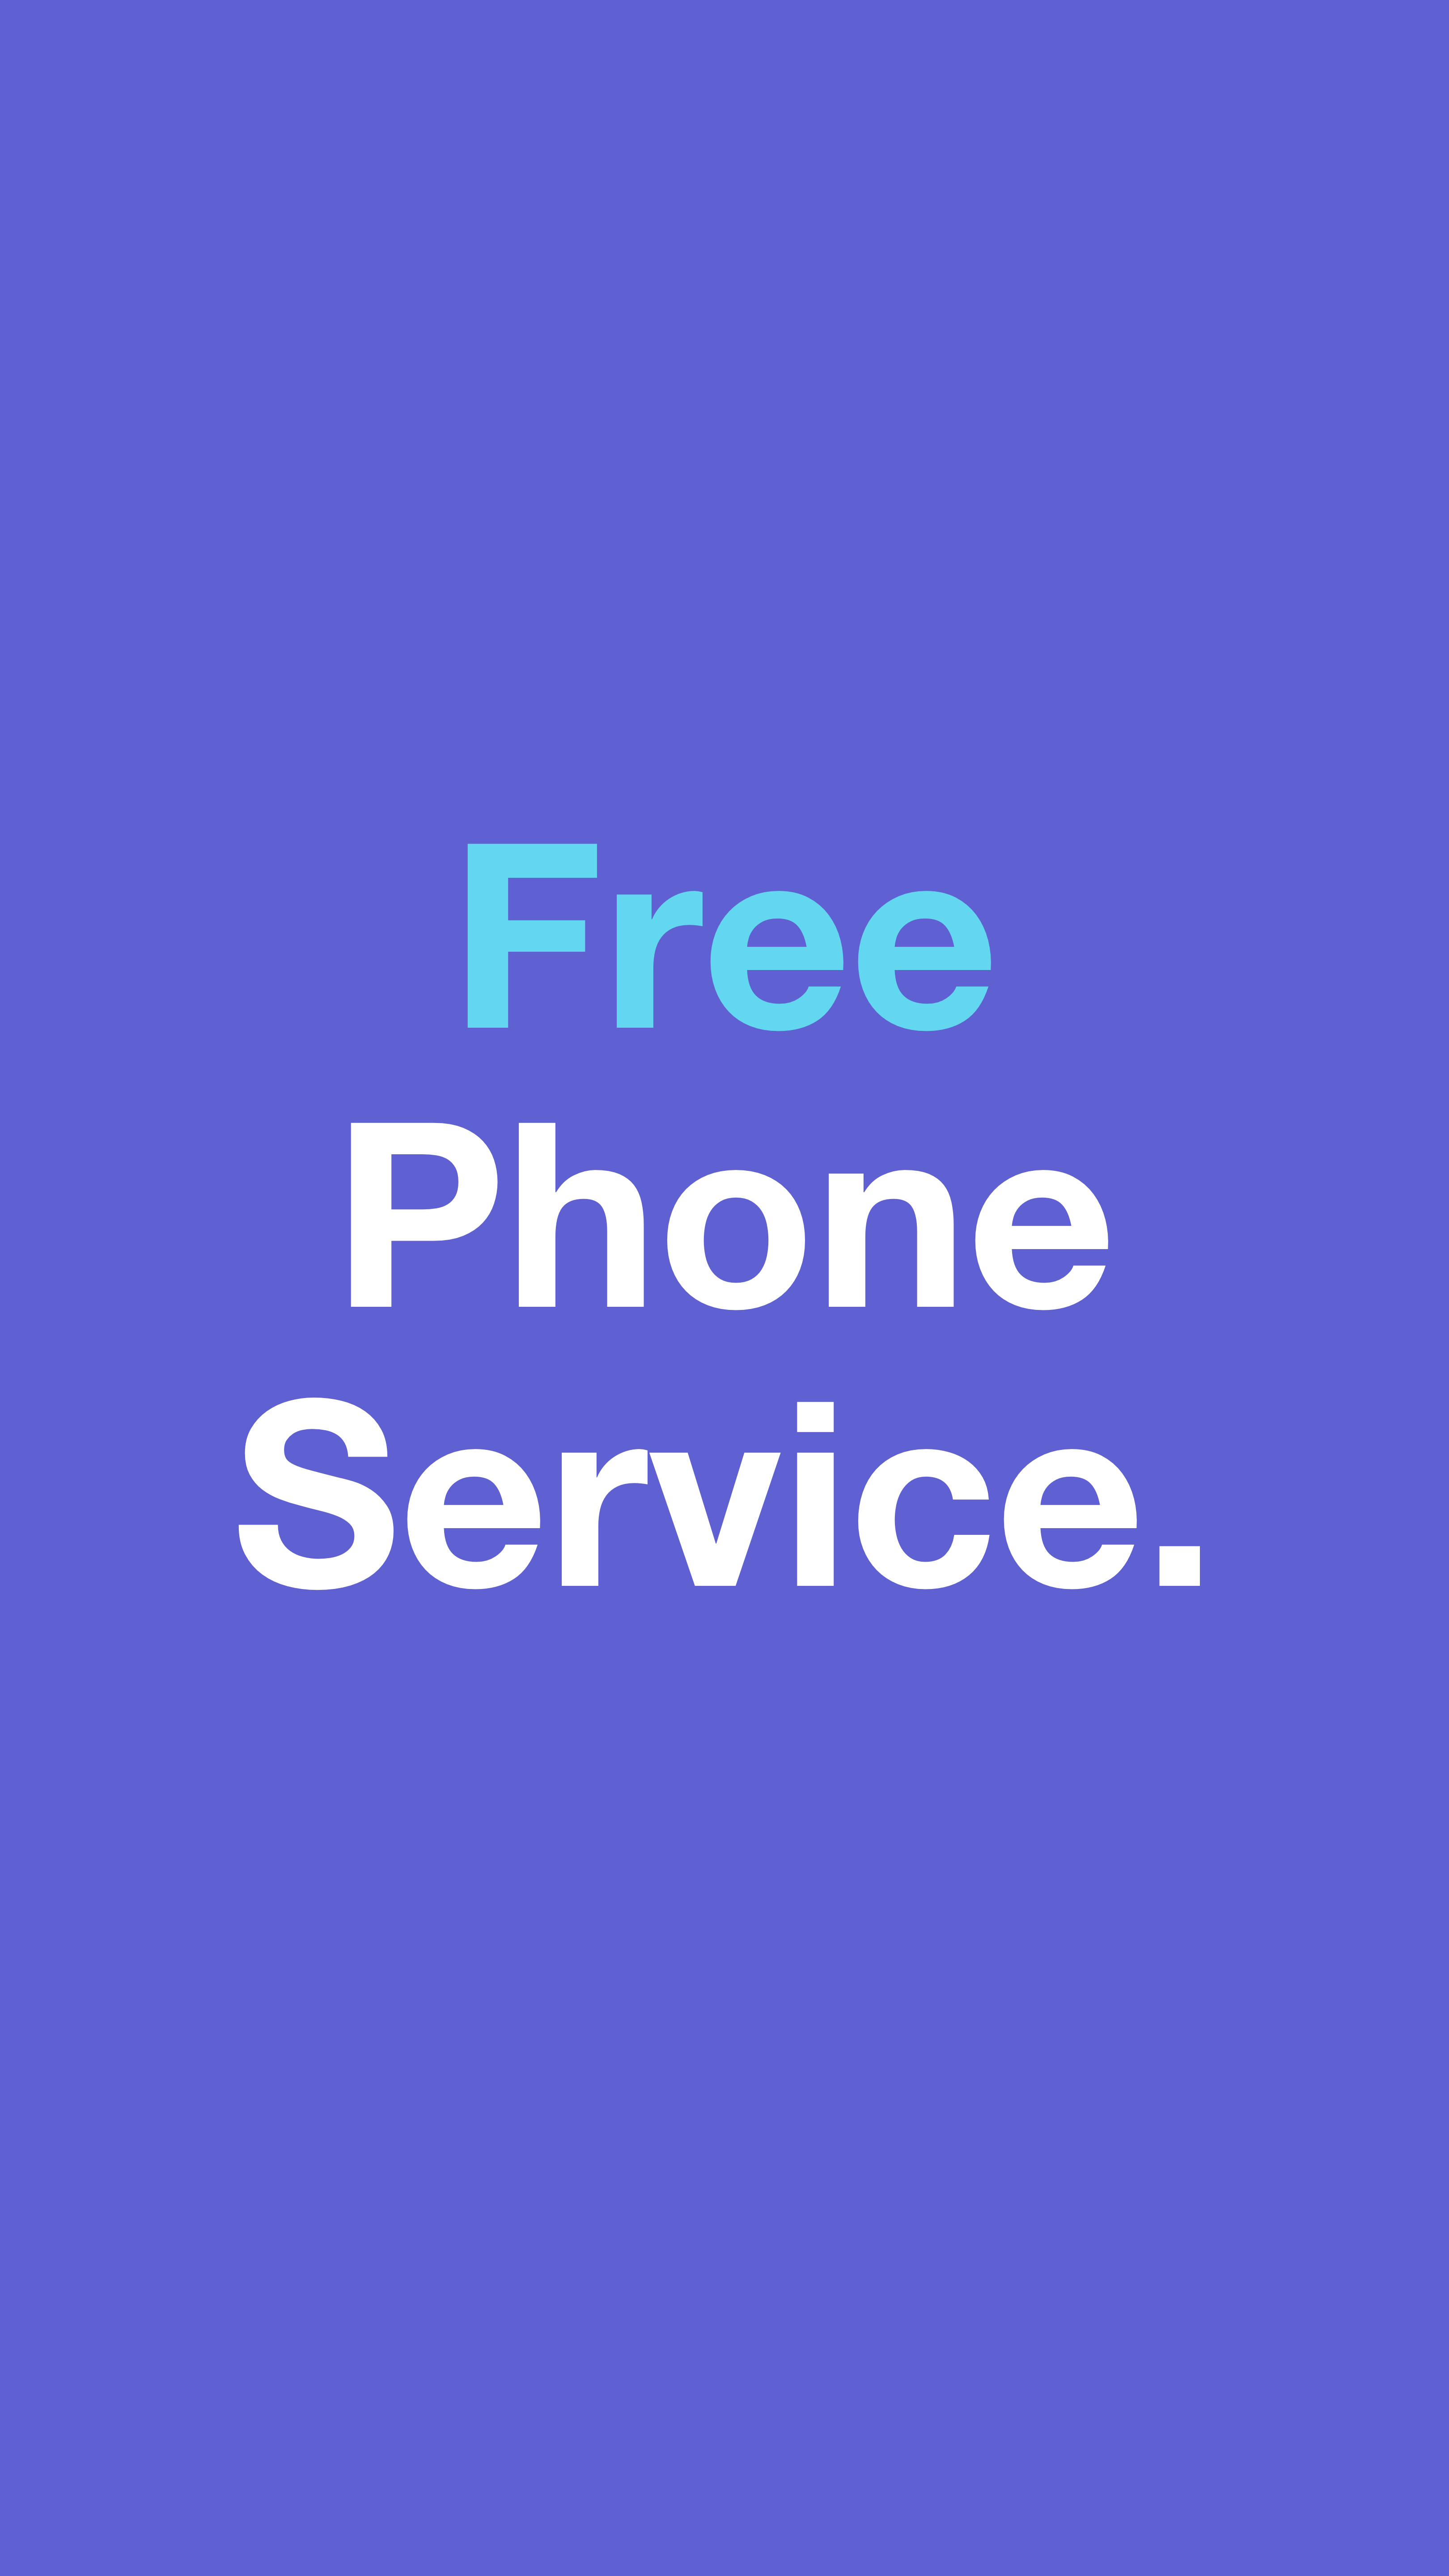 Free Phone Service.